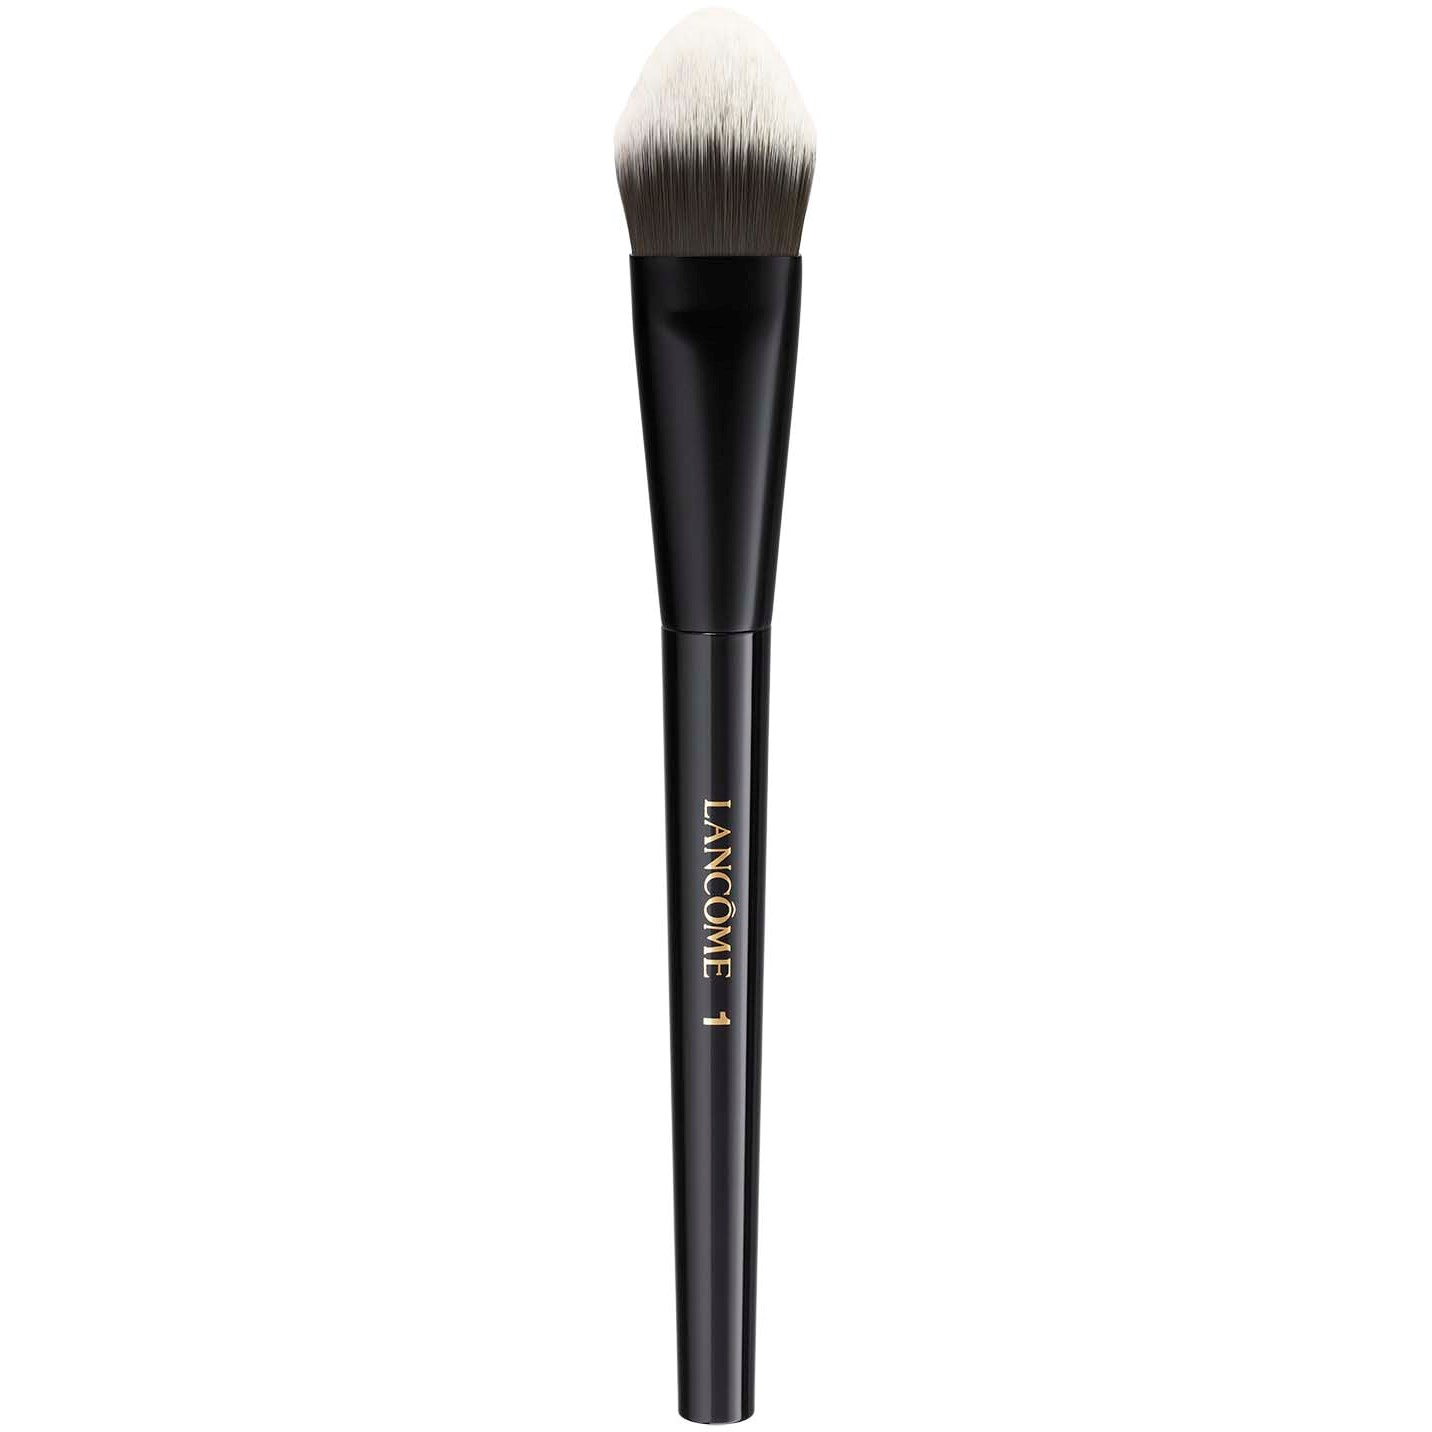 Lancôme Divers Maquillage Full Flat Brush #1